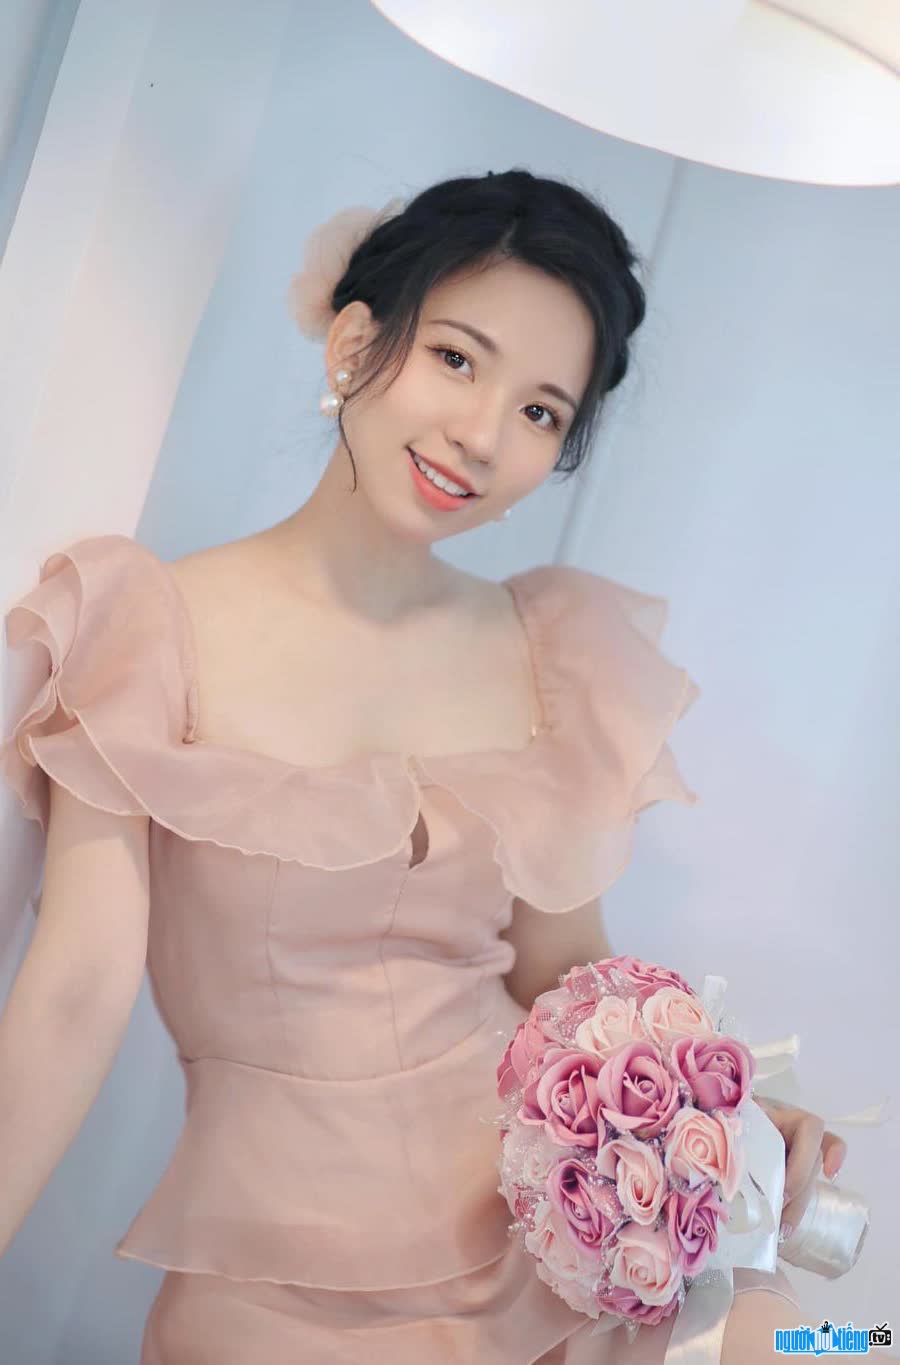 New photos of Asian beauty Mivi Diem Anh